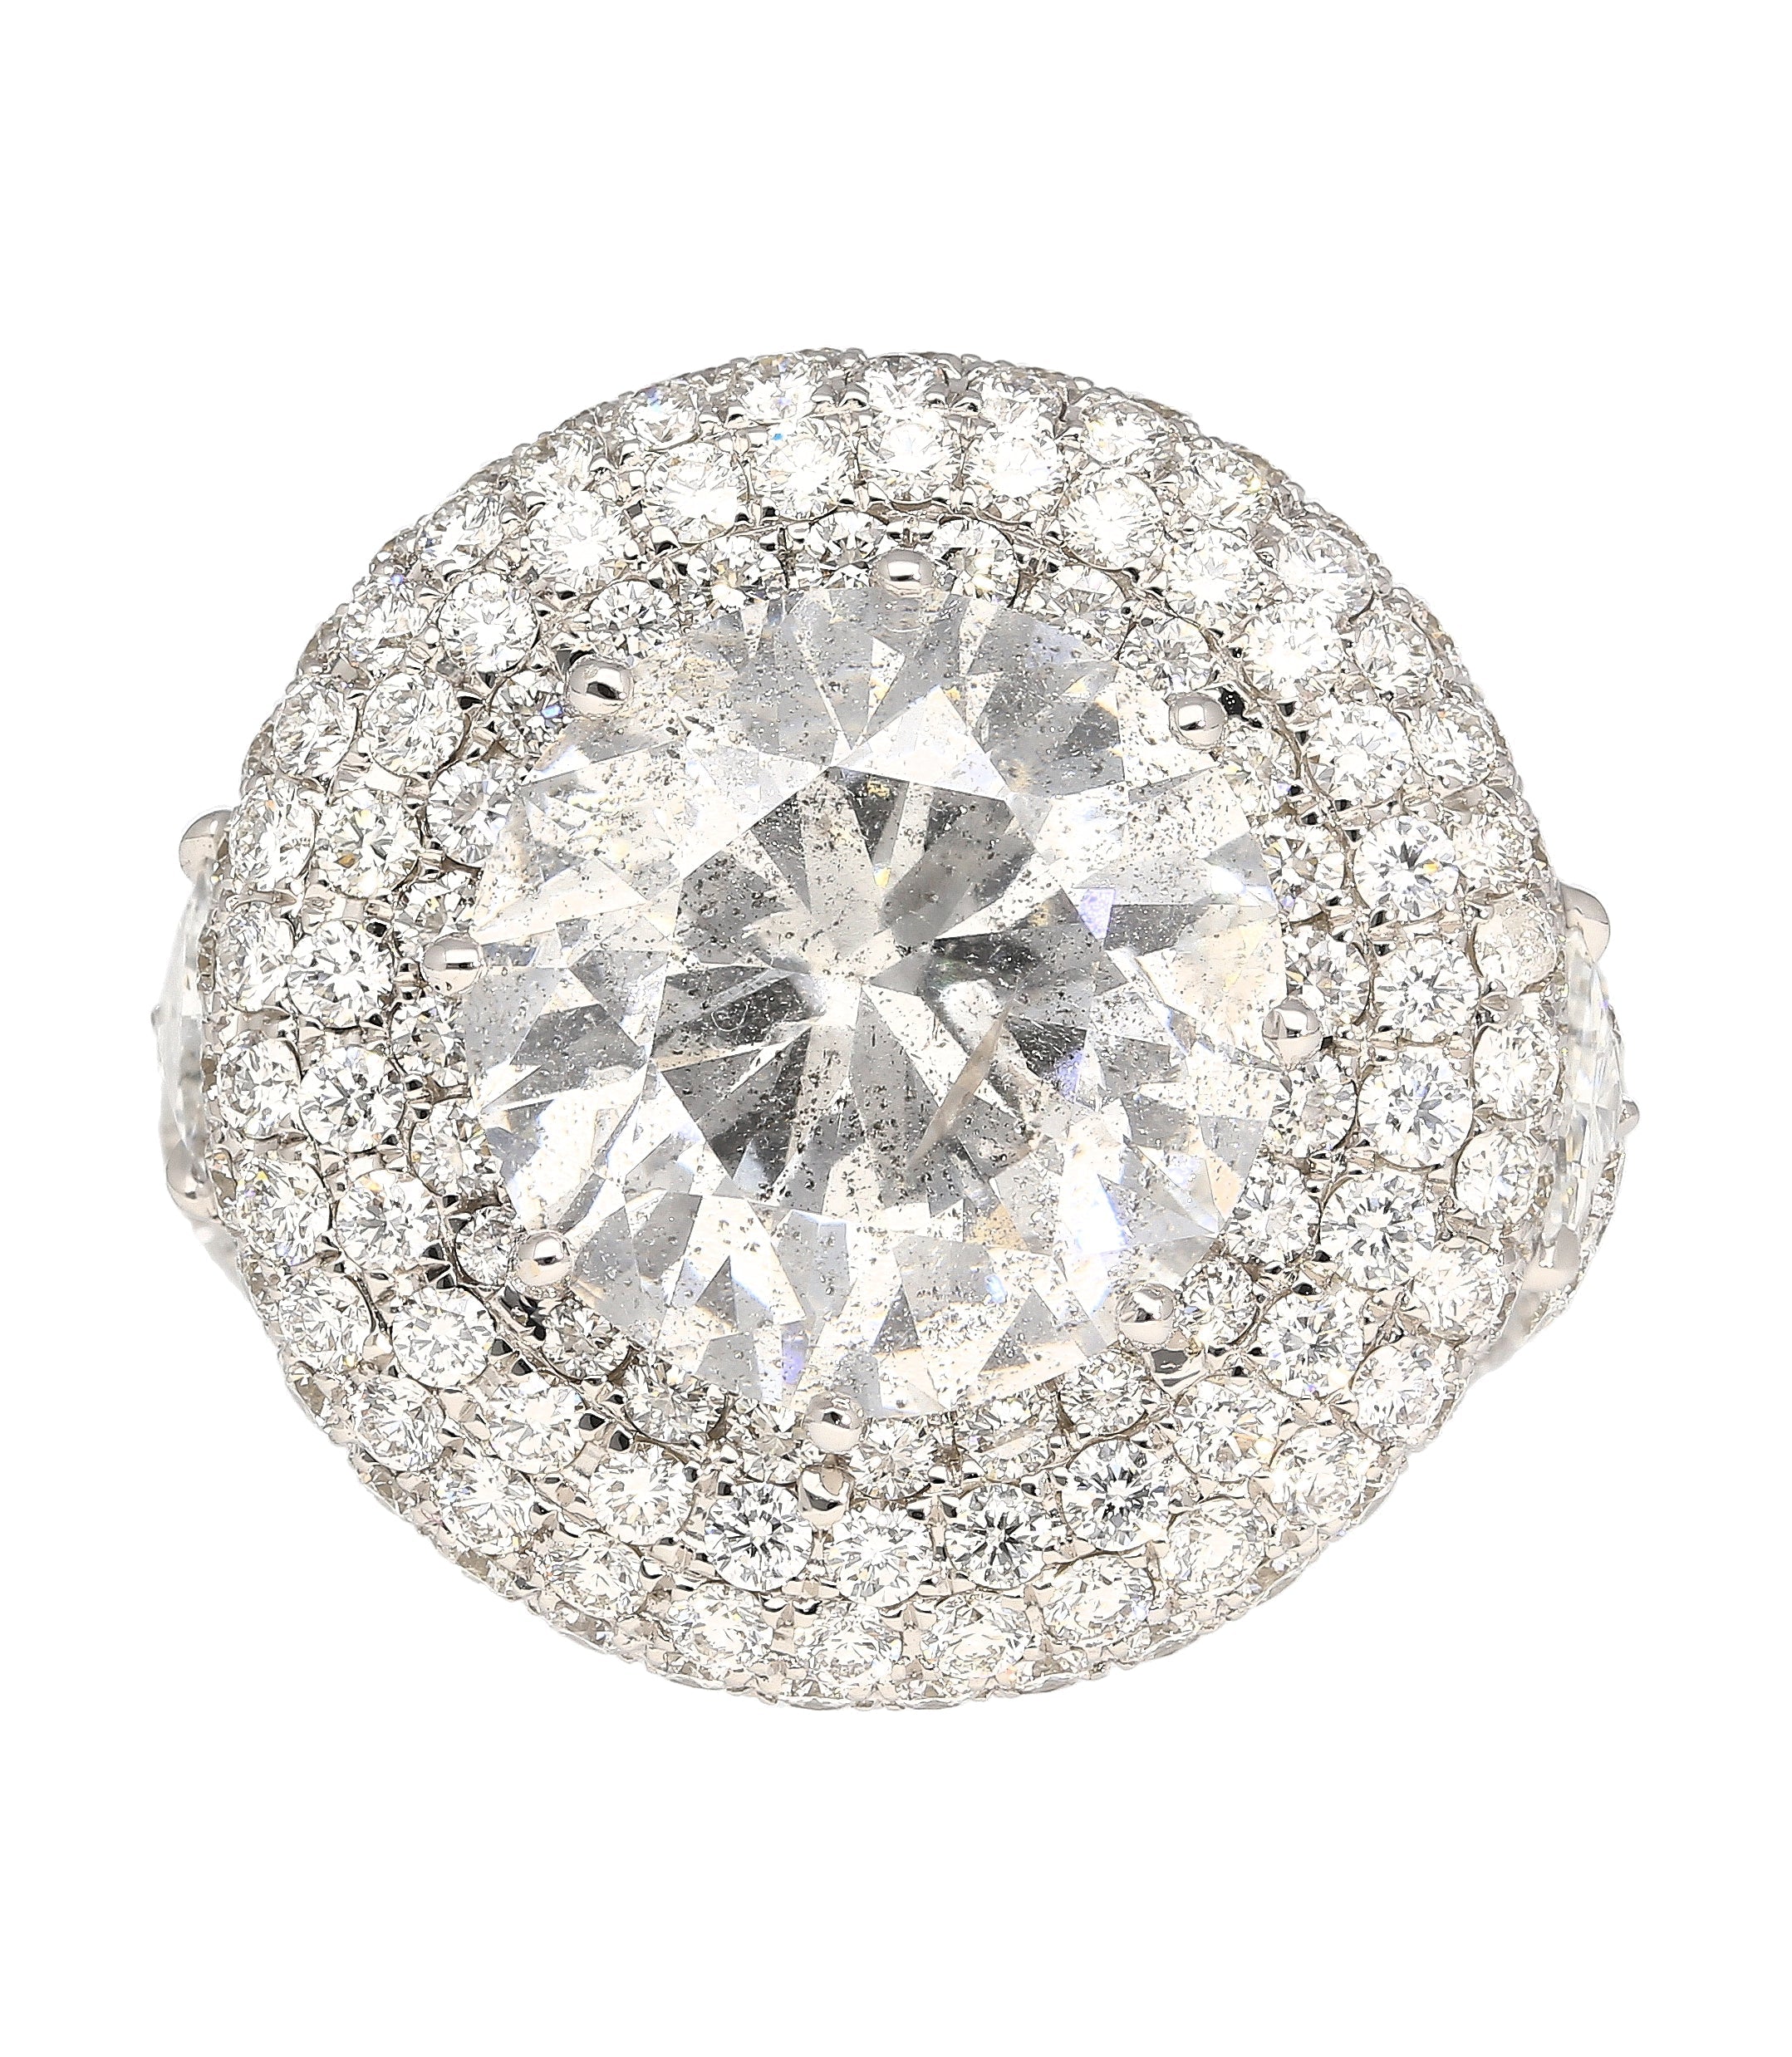 7_71-Carat-Round-Cut-I2-Natural-Diamond-Cluster-Ring-in-18K-White-Gold-Engagement-Ring.jpg